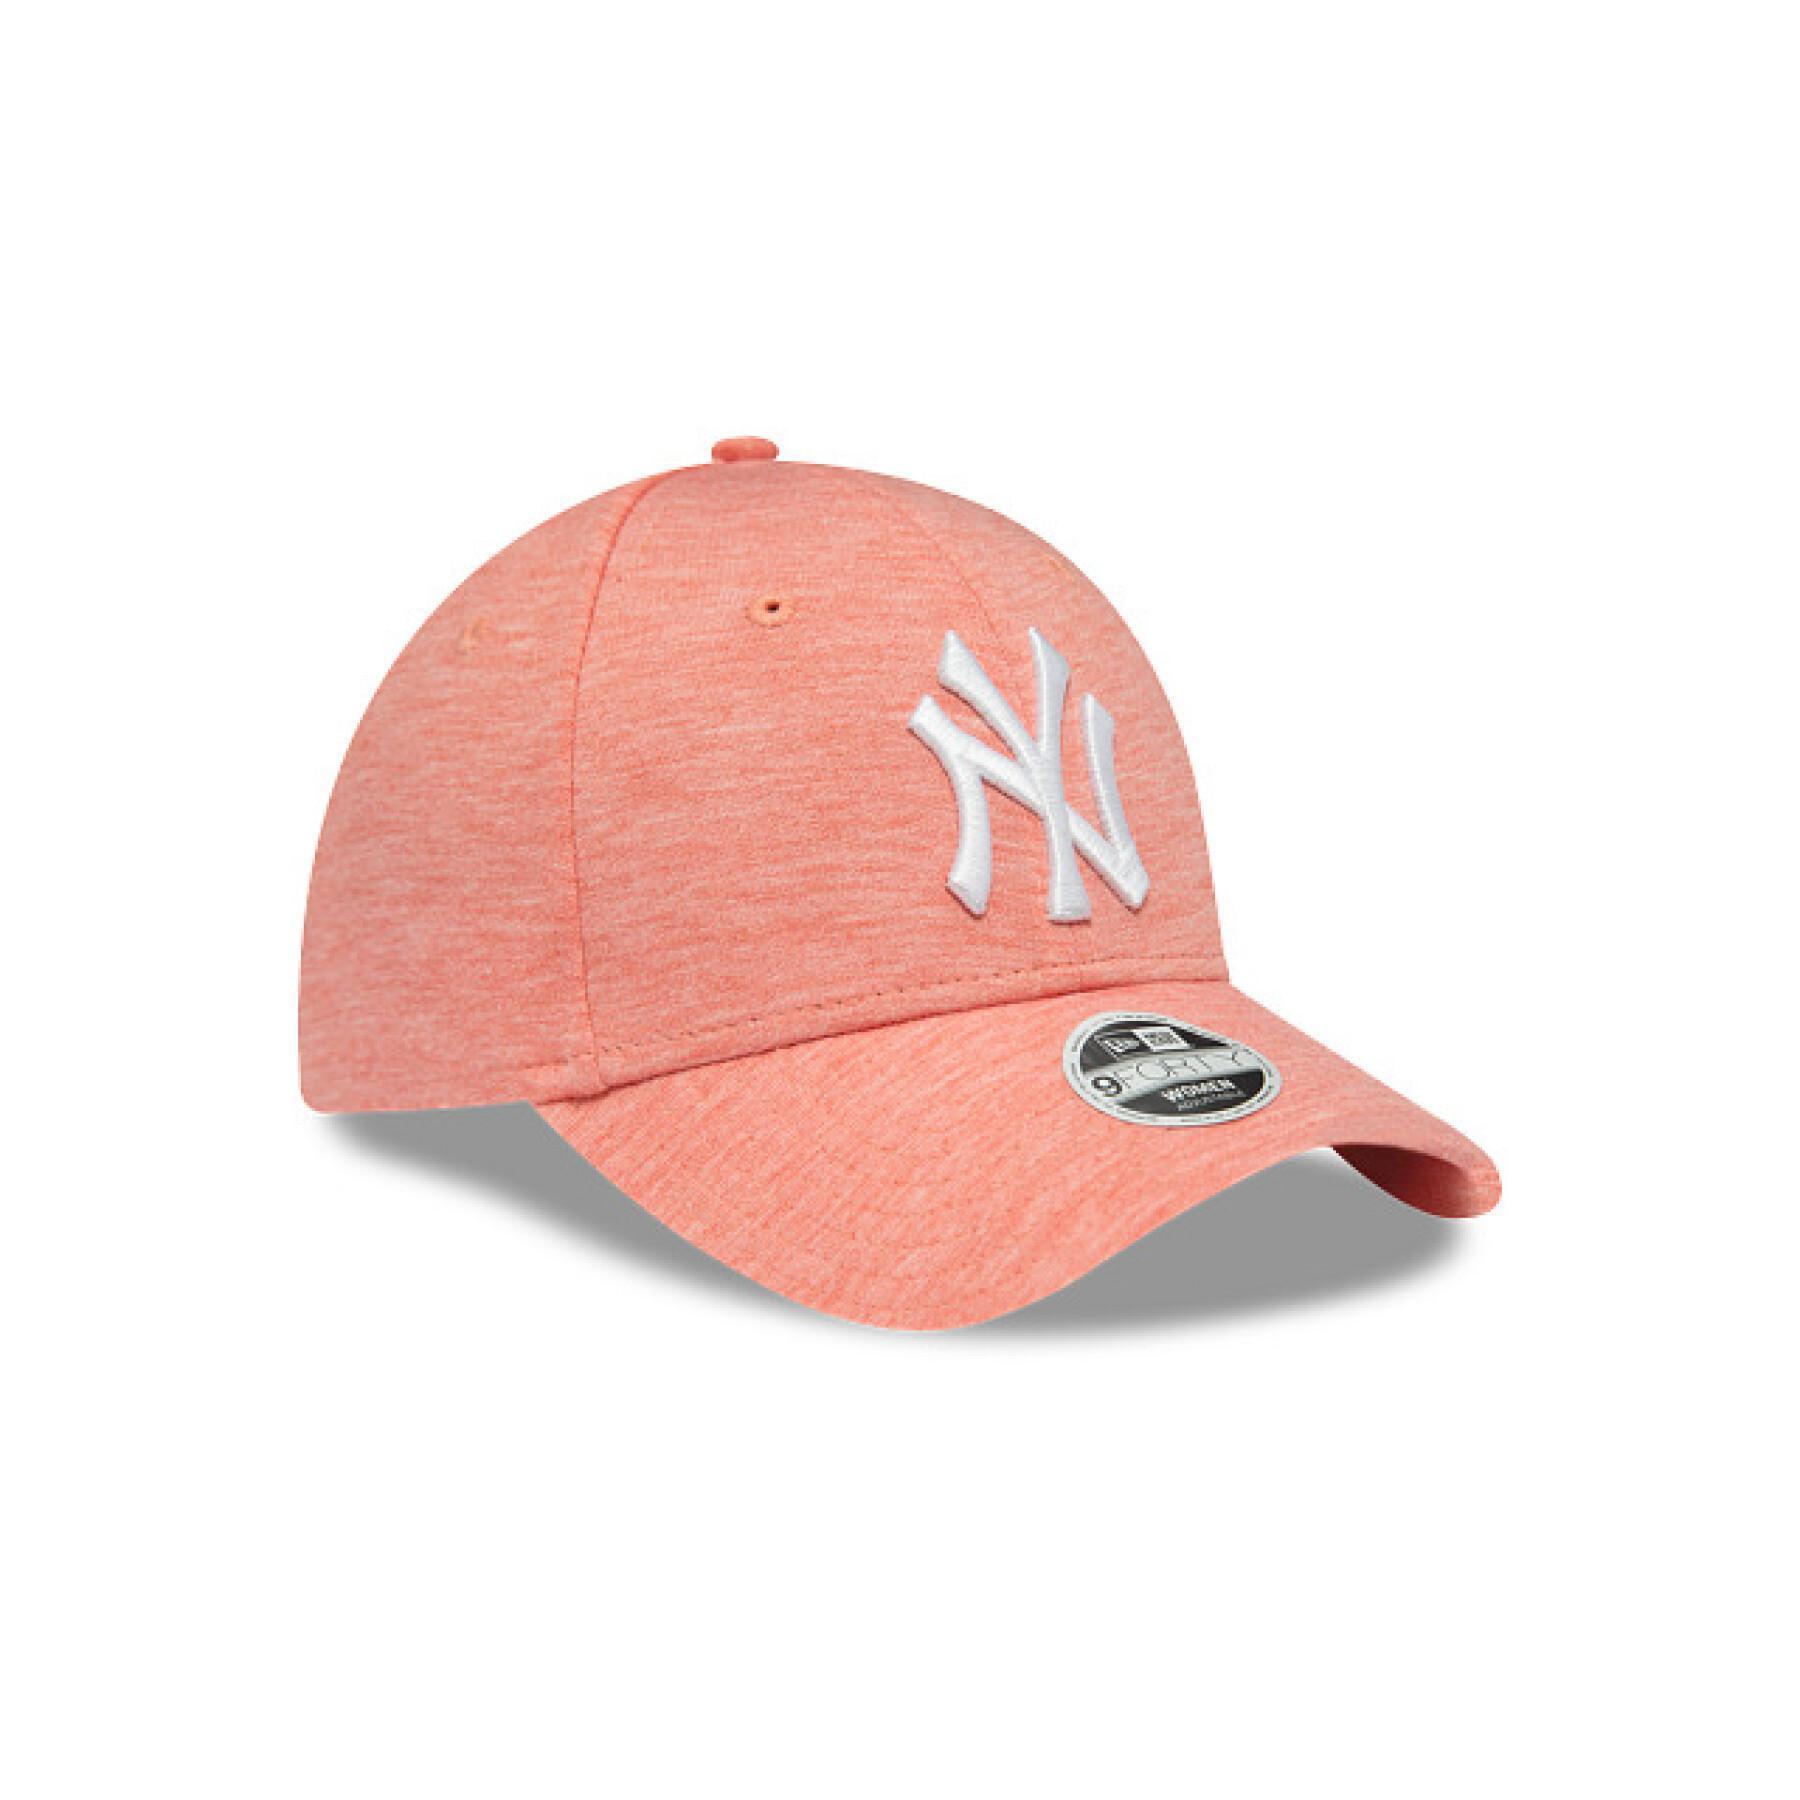 Women's cap New York Yankees Jersey 9FORTY - Caps - Accessories